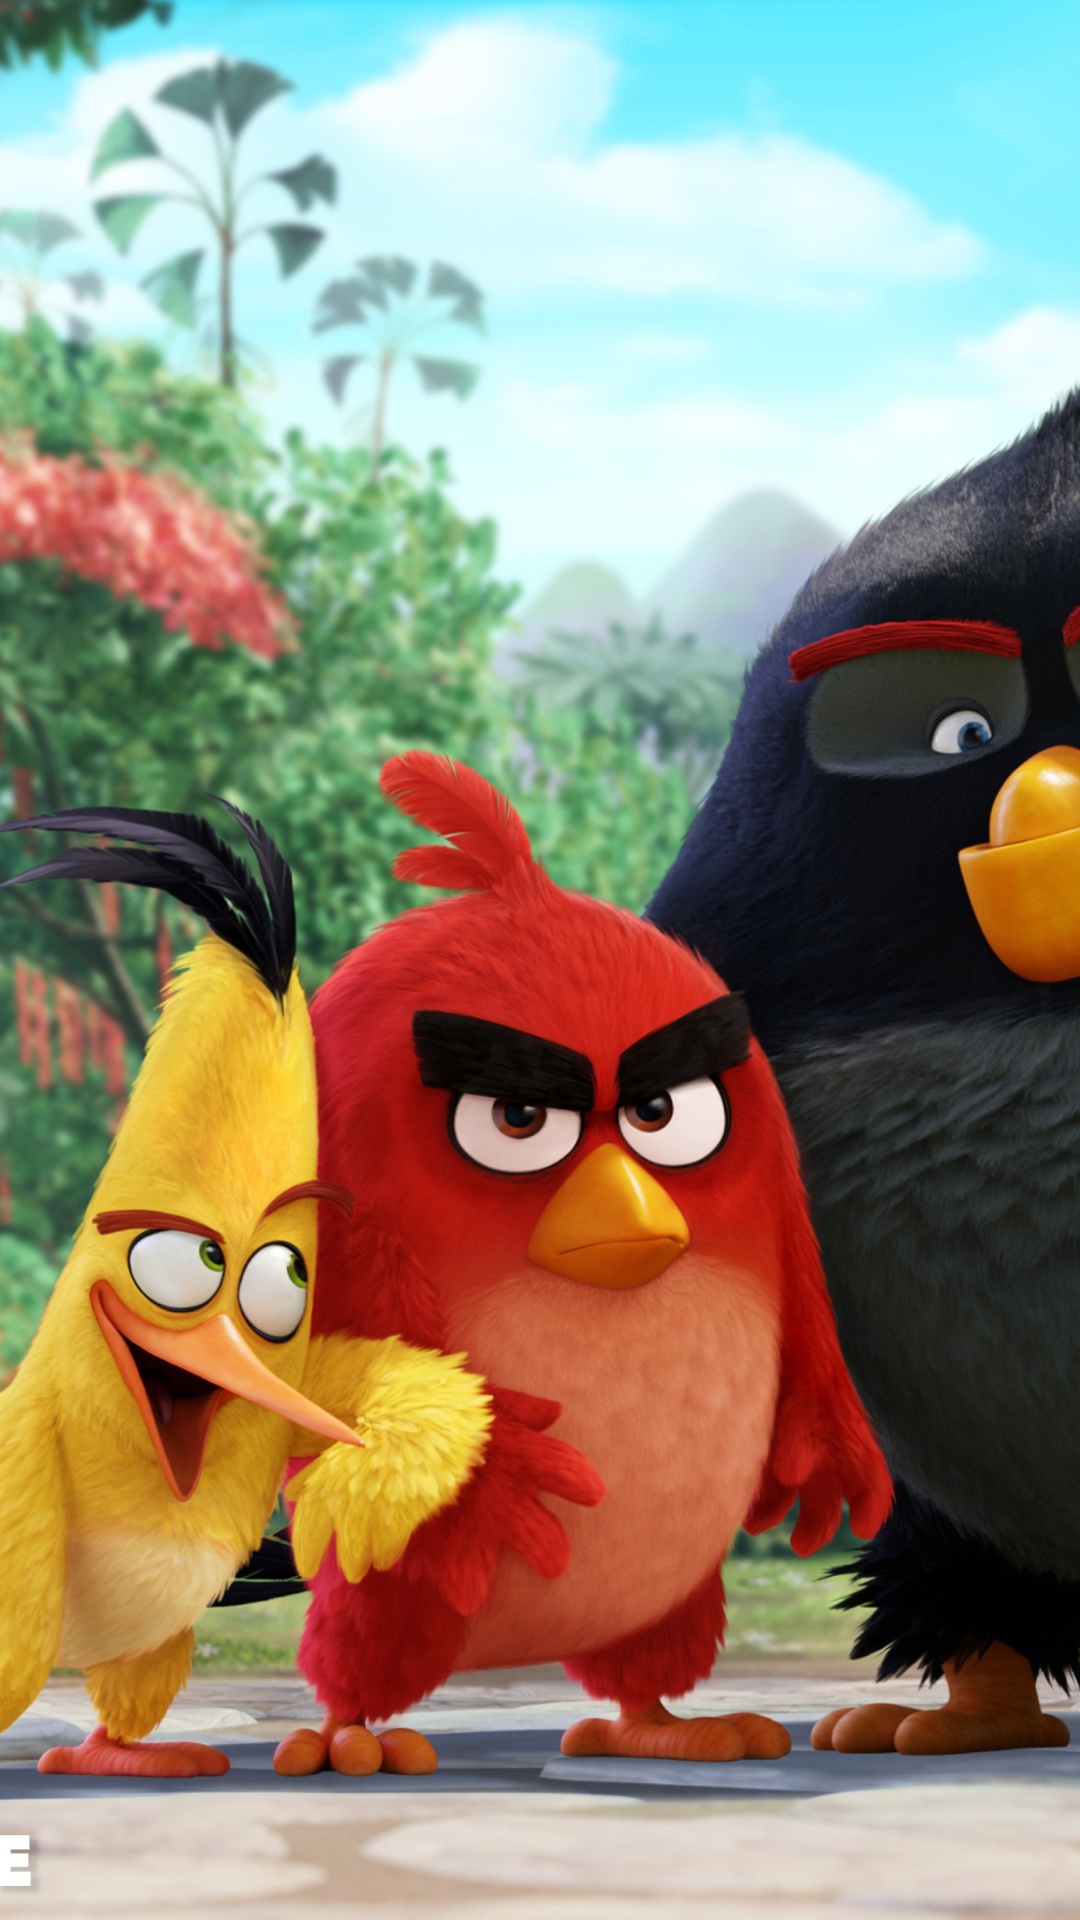 Angry Birds the Movie 2015 Movie by Rovio screenshot #1 1080x1920